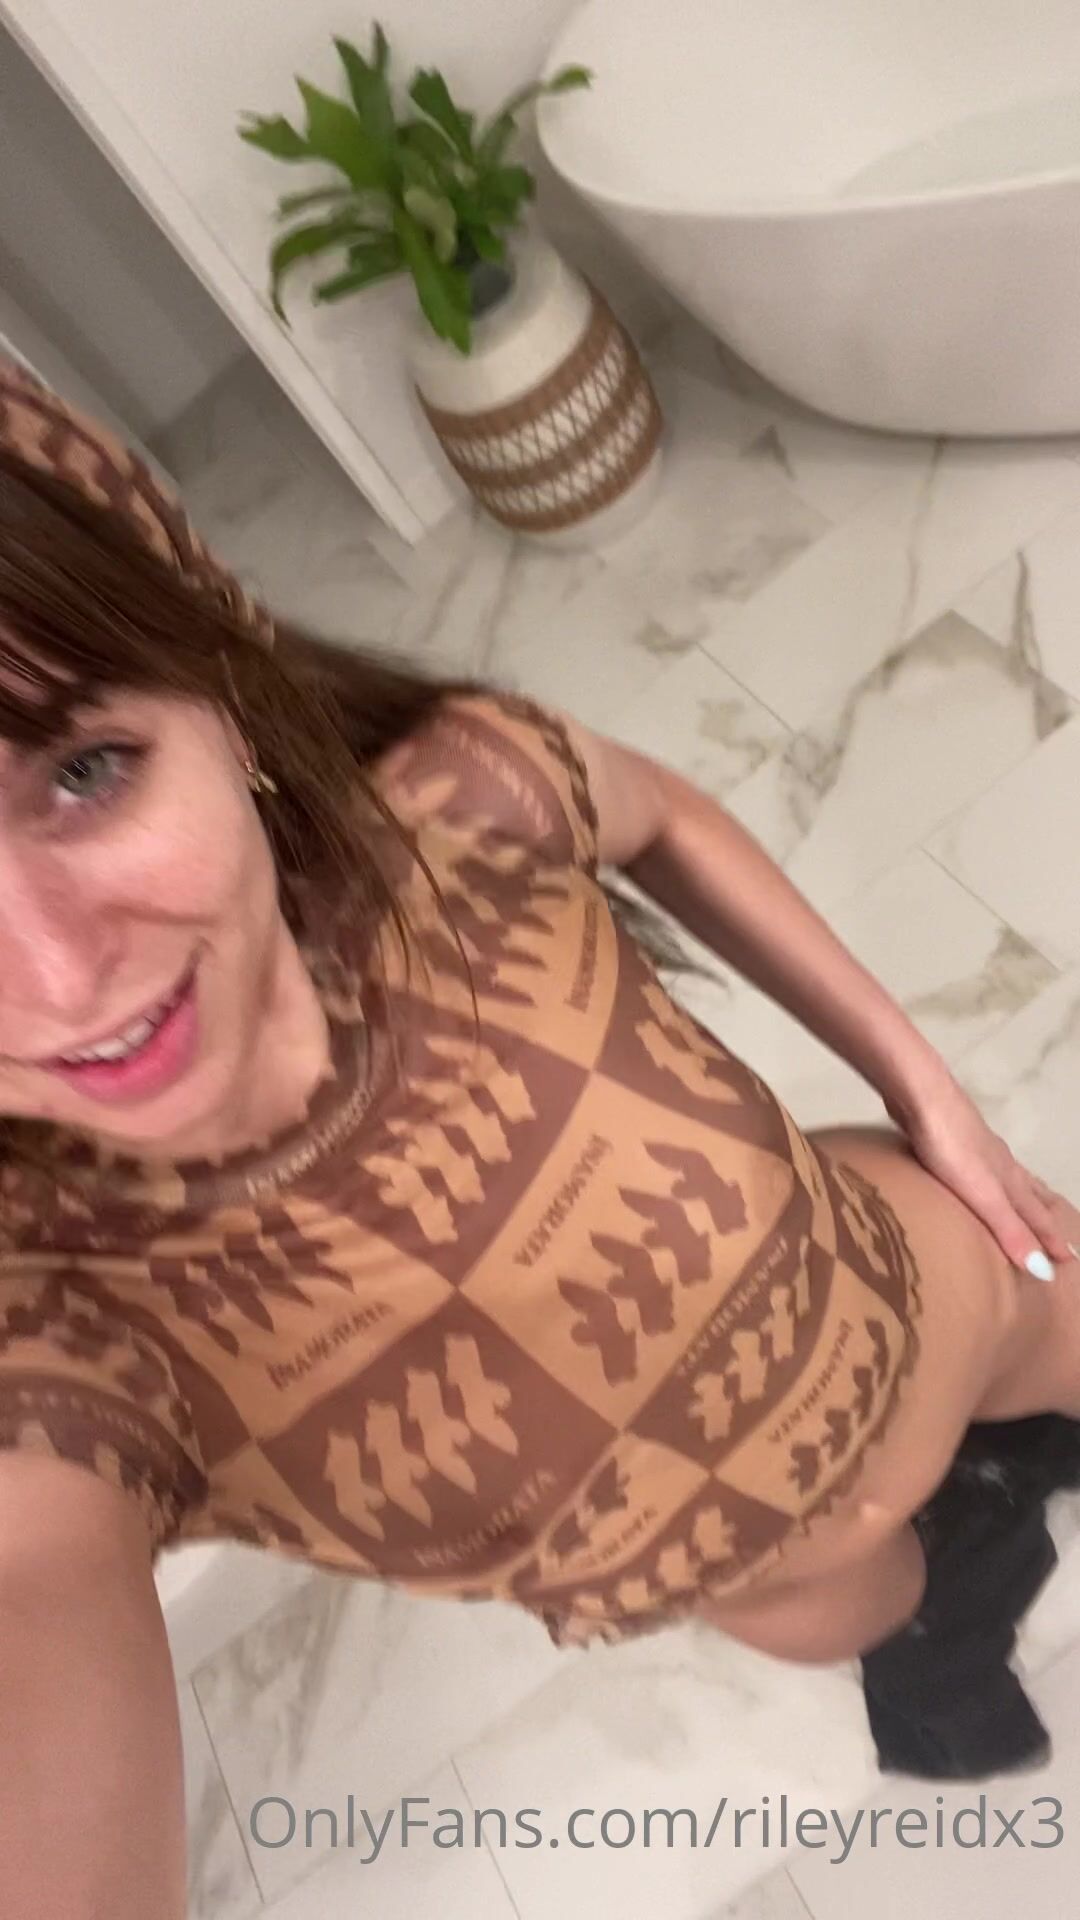 Riley Reid Shower Show ONLYFANS Video